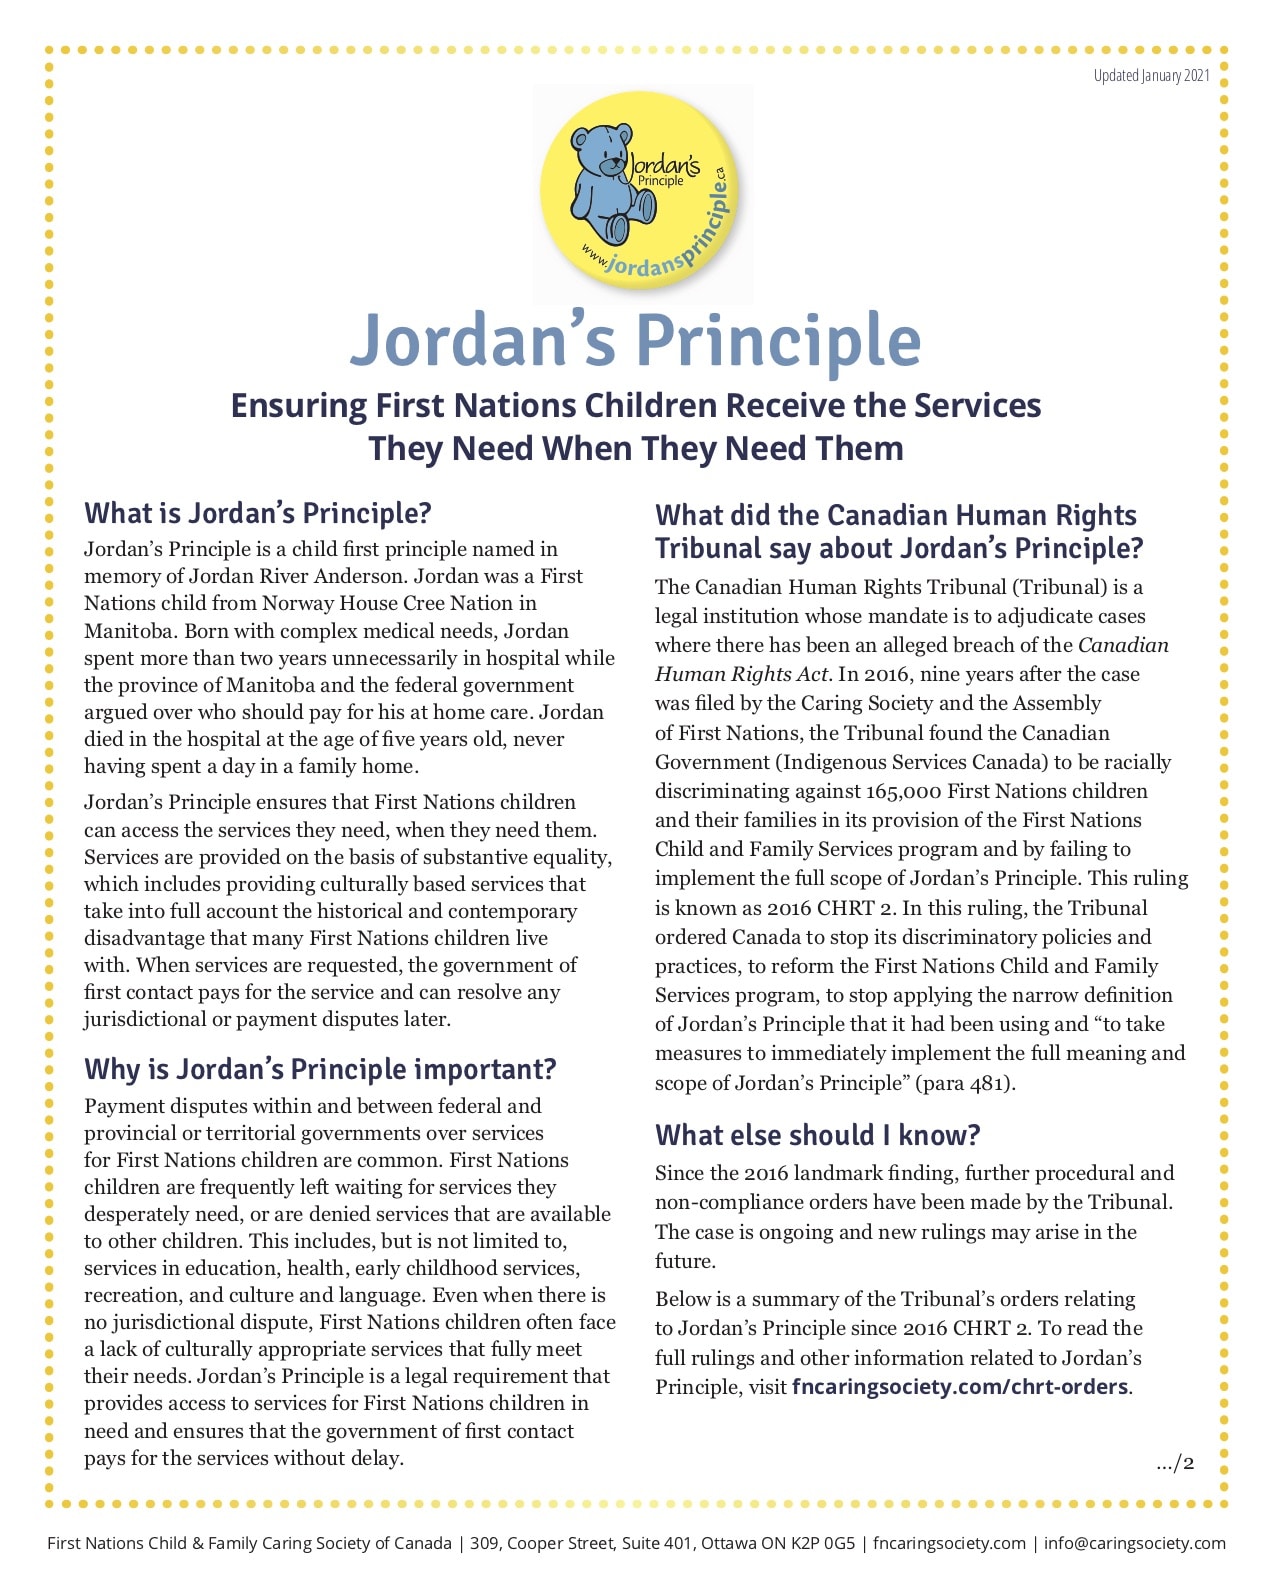 Jordan’s Principle